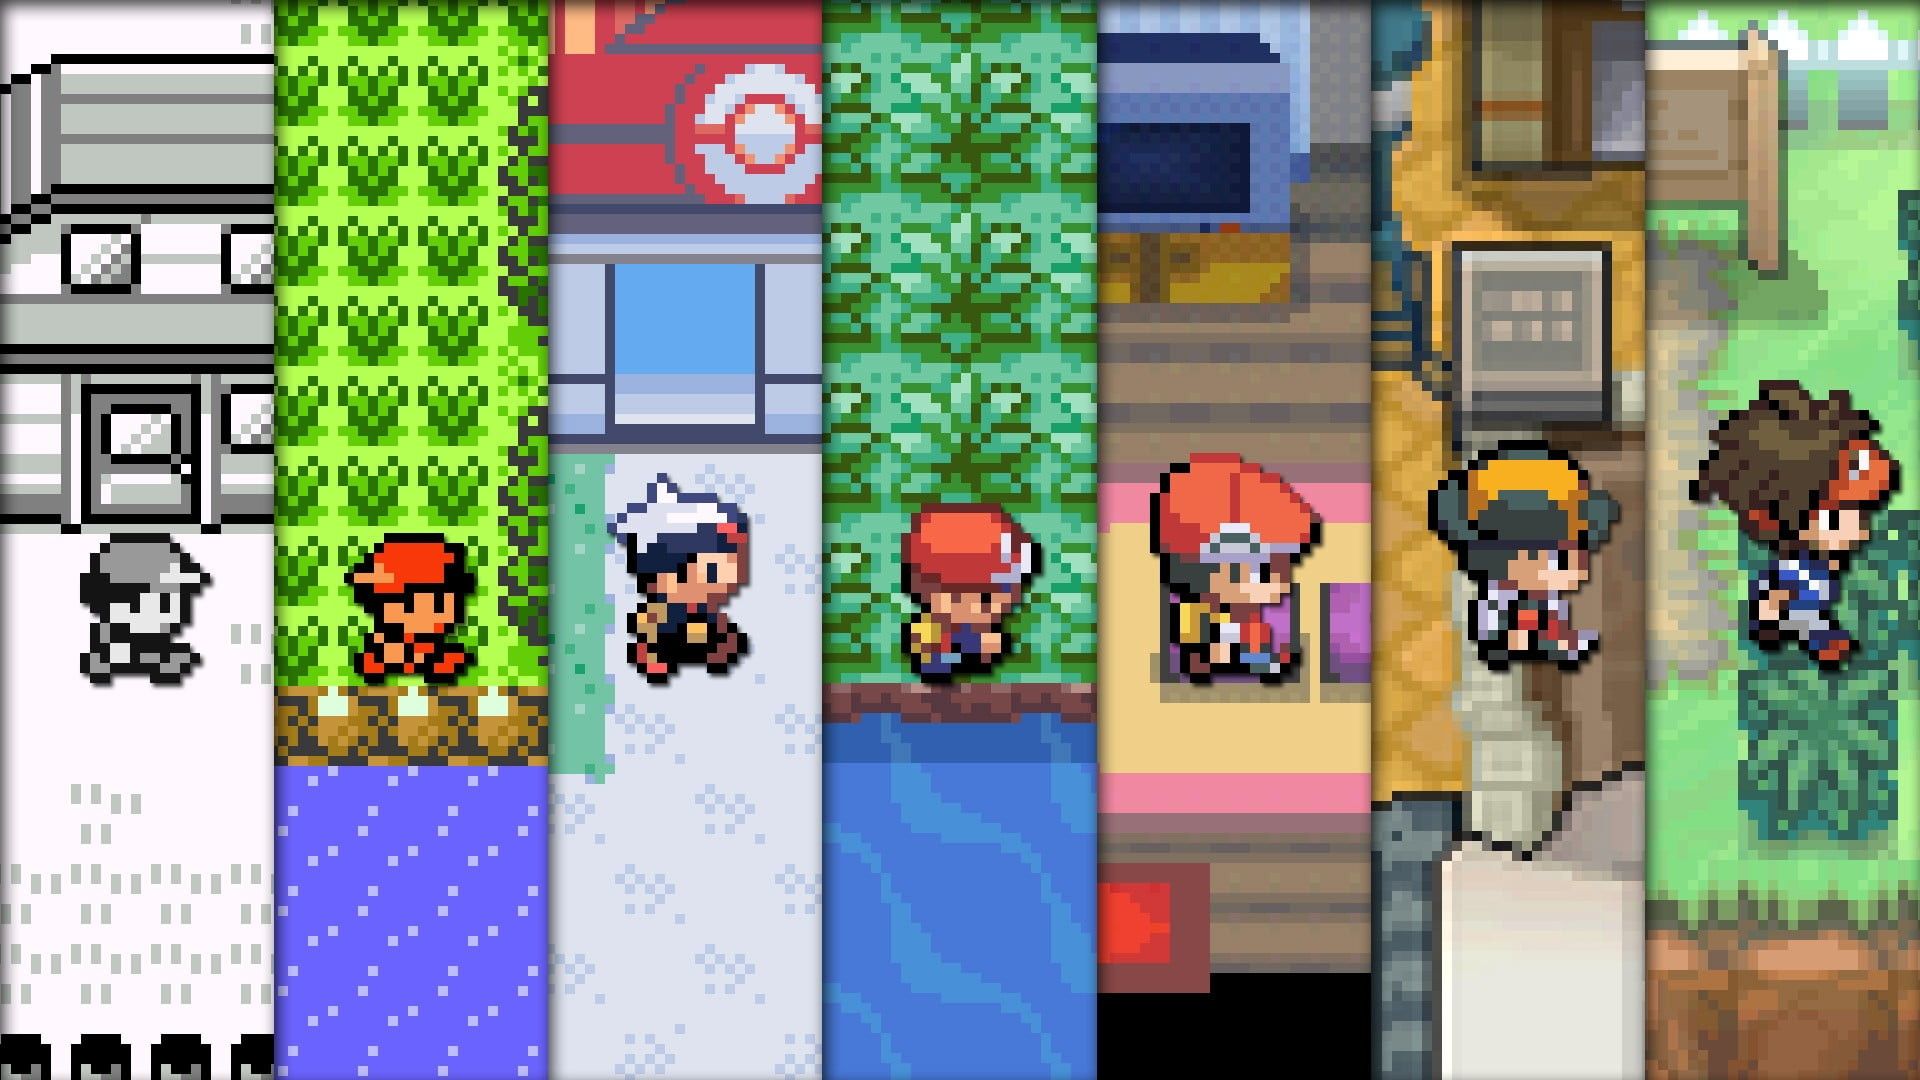 Pokemon Game Background